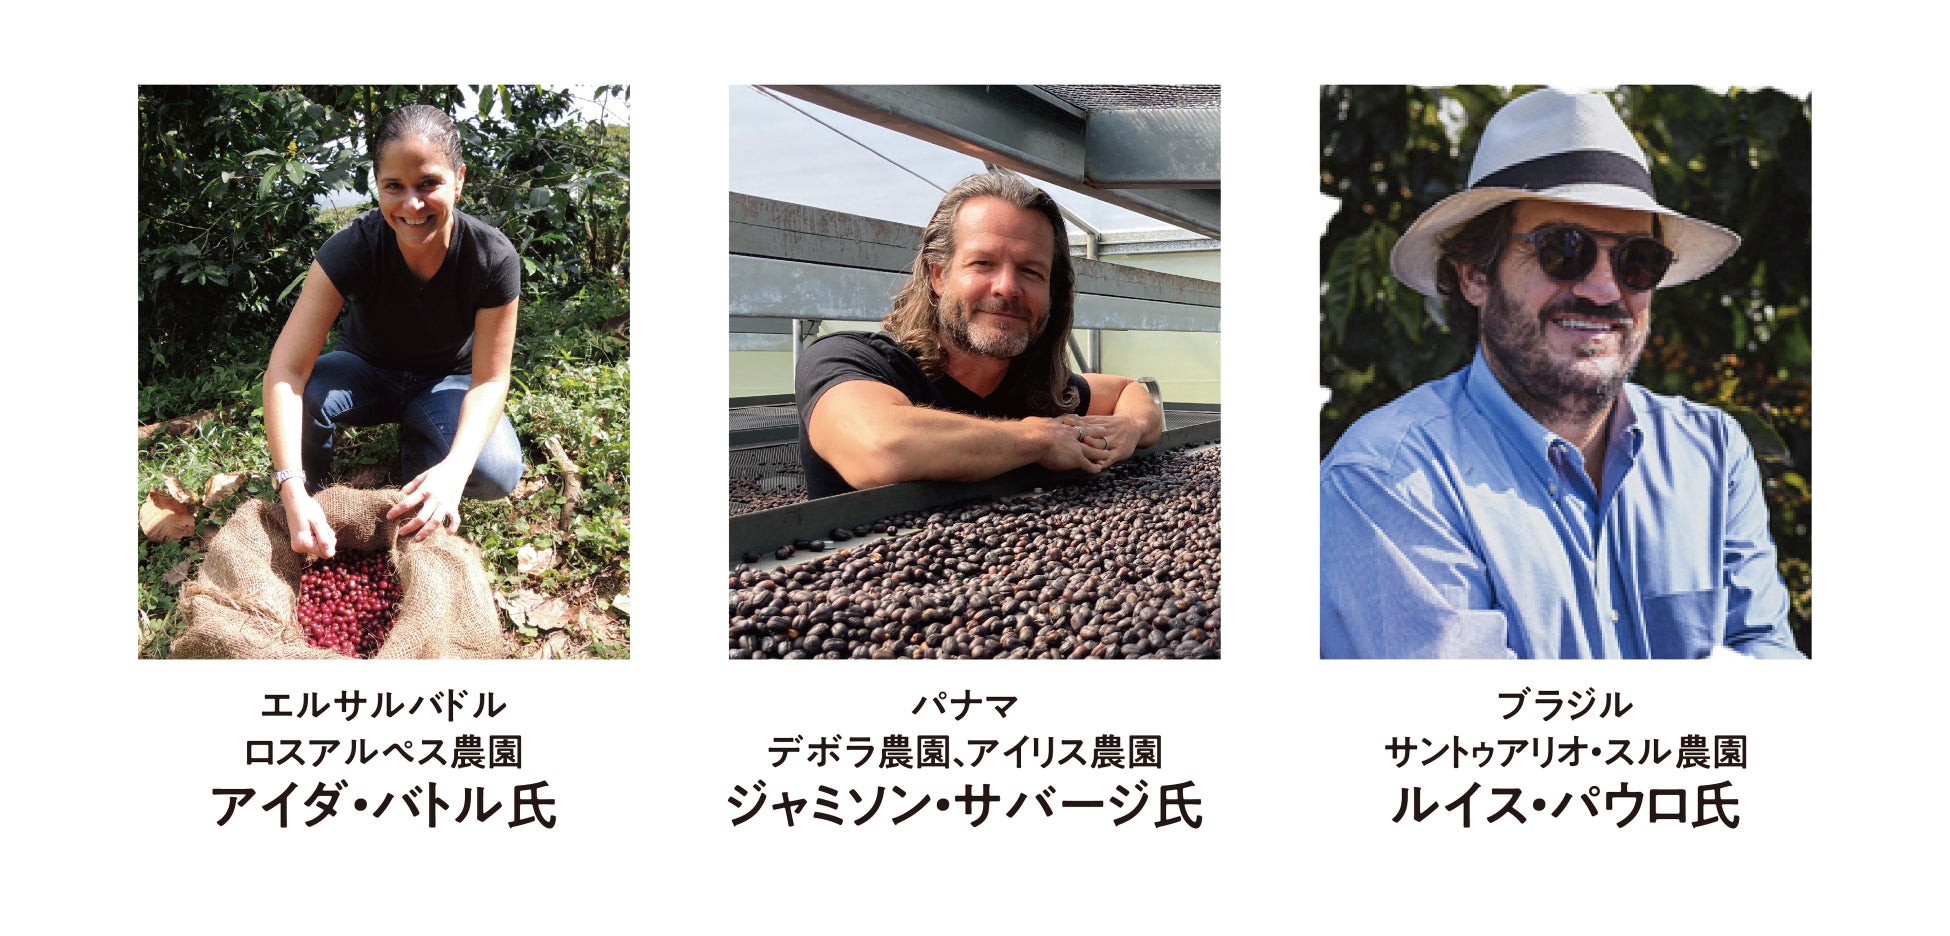 OGAWA COFFEE LABORATORY presents SPECIAL WEEK 開催！SCAJ期間にあわせた小川珈琲のスペシャルイベント